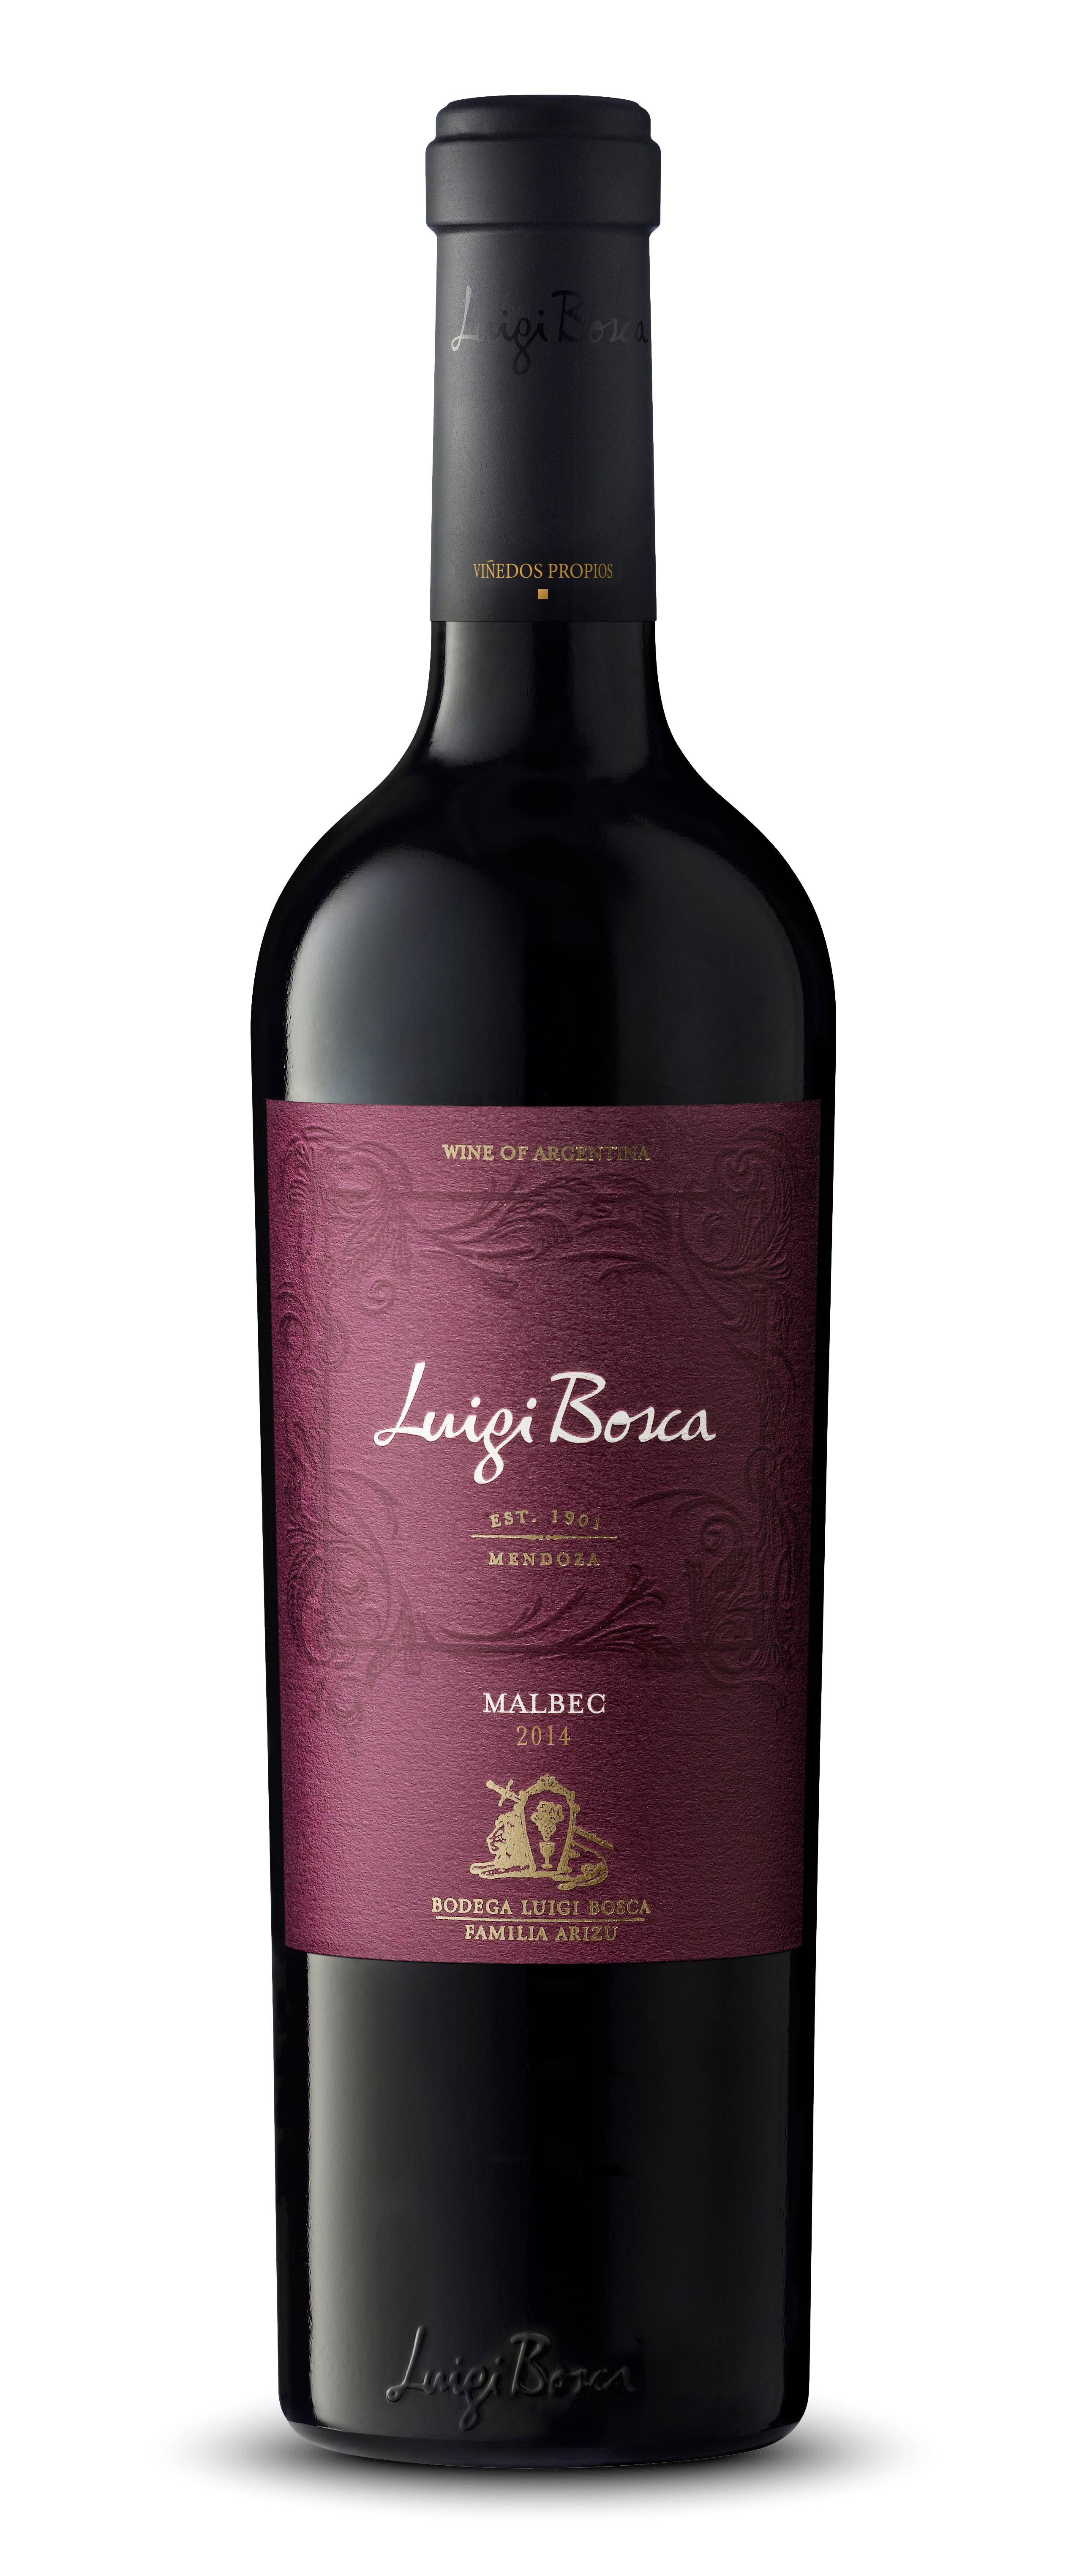 Luigi Bosca Malbec, Argentina (Vintage Varies) - 750 ml bottle